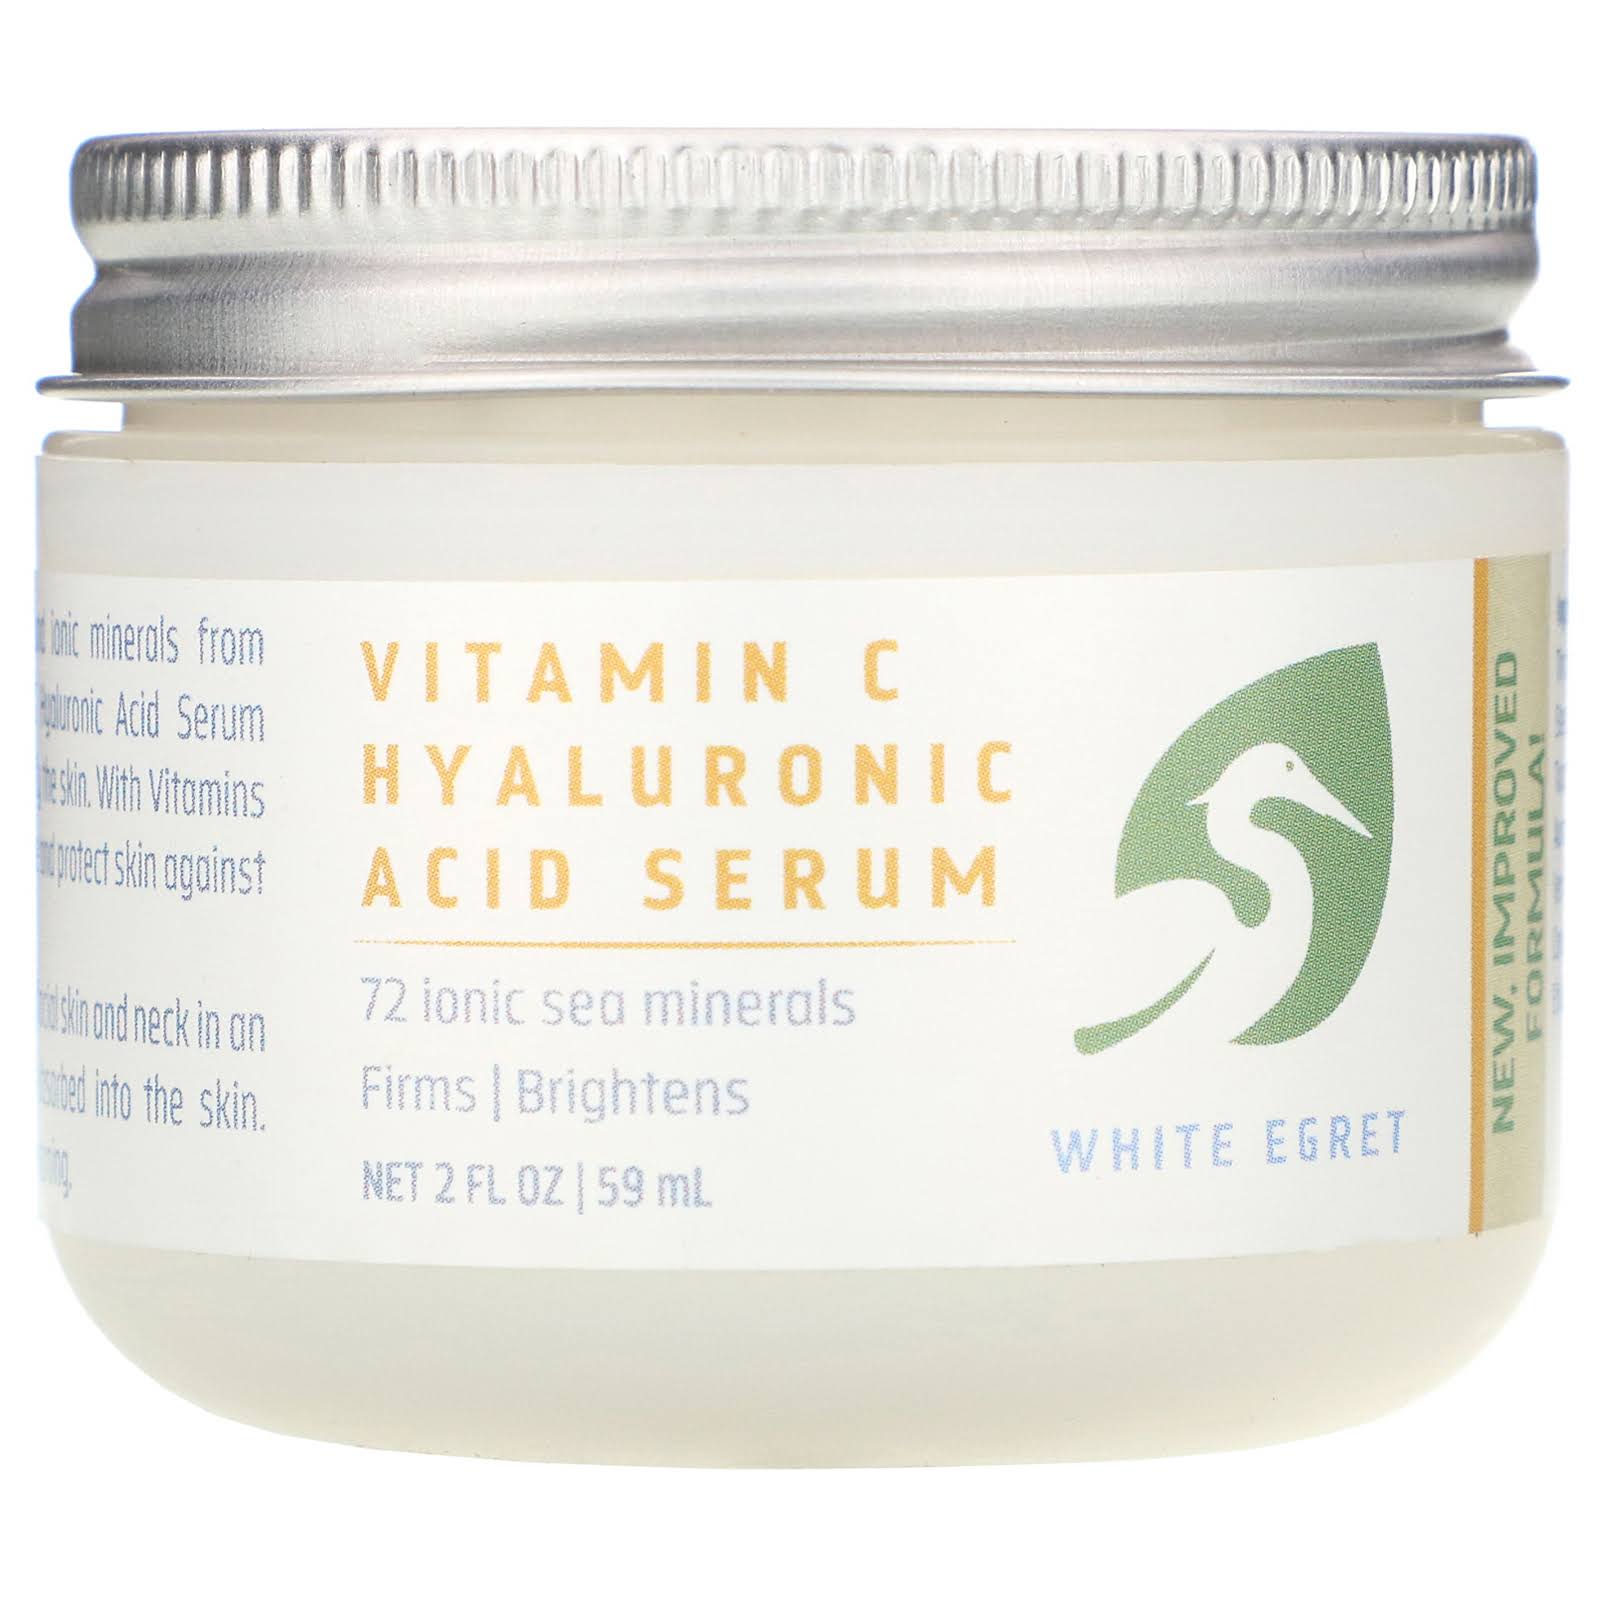 White Egret Vitamin C Hyaluronic Acid Serum - 2oz